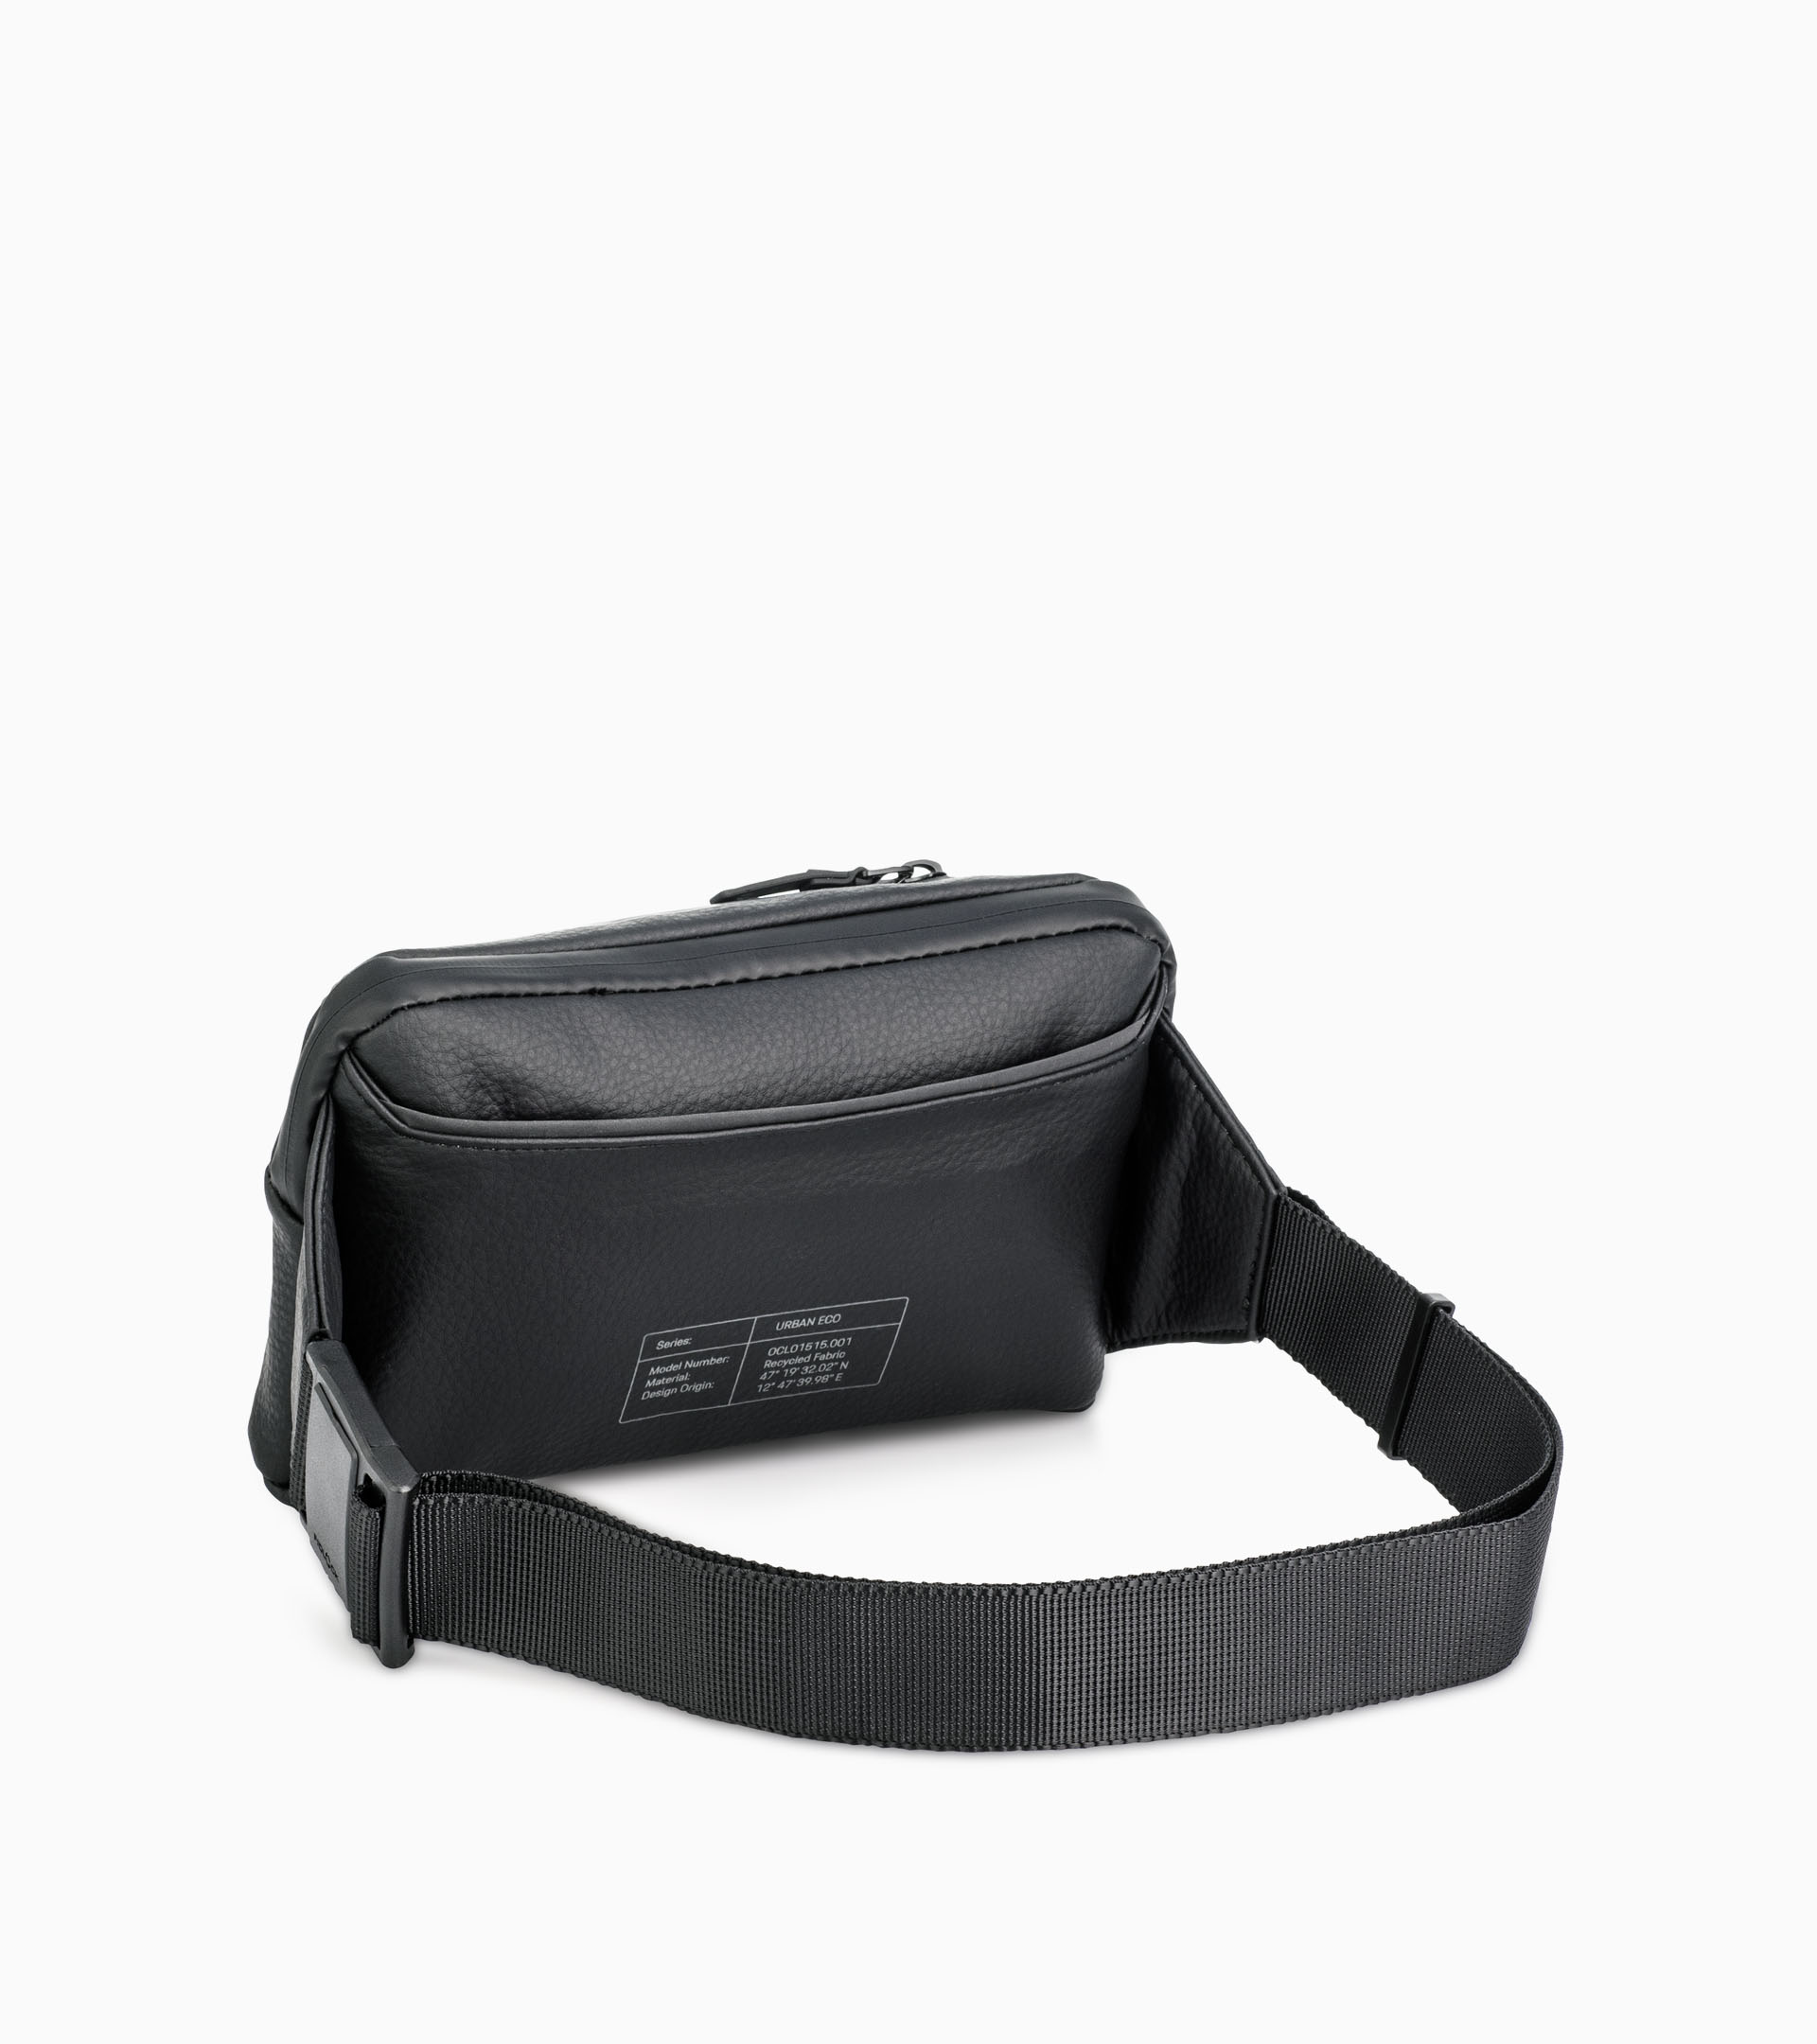 Urban Eco RL Belt Bag black - Men's Shoulder Bag - Practical & Comfortable  | Porsche Design | Porsche Design